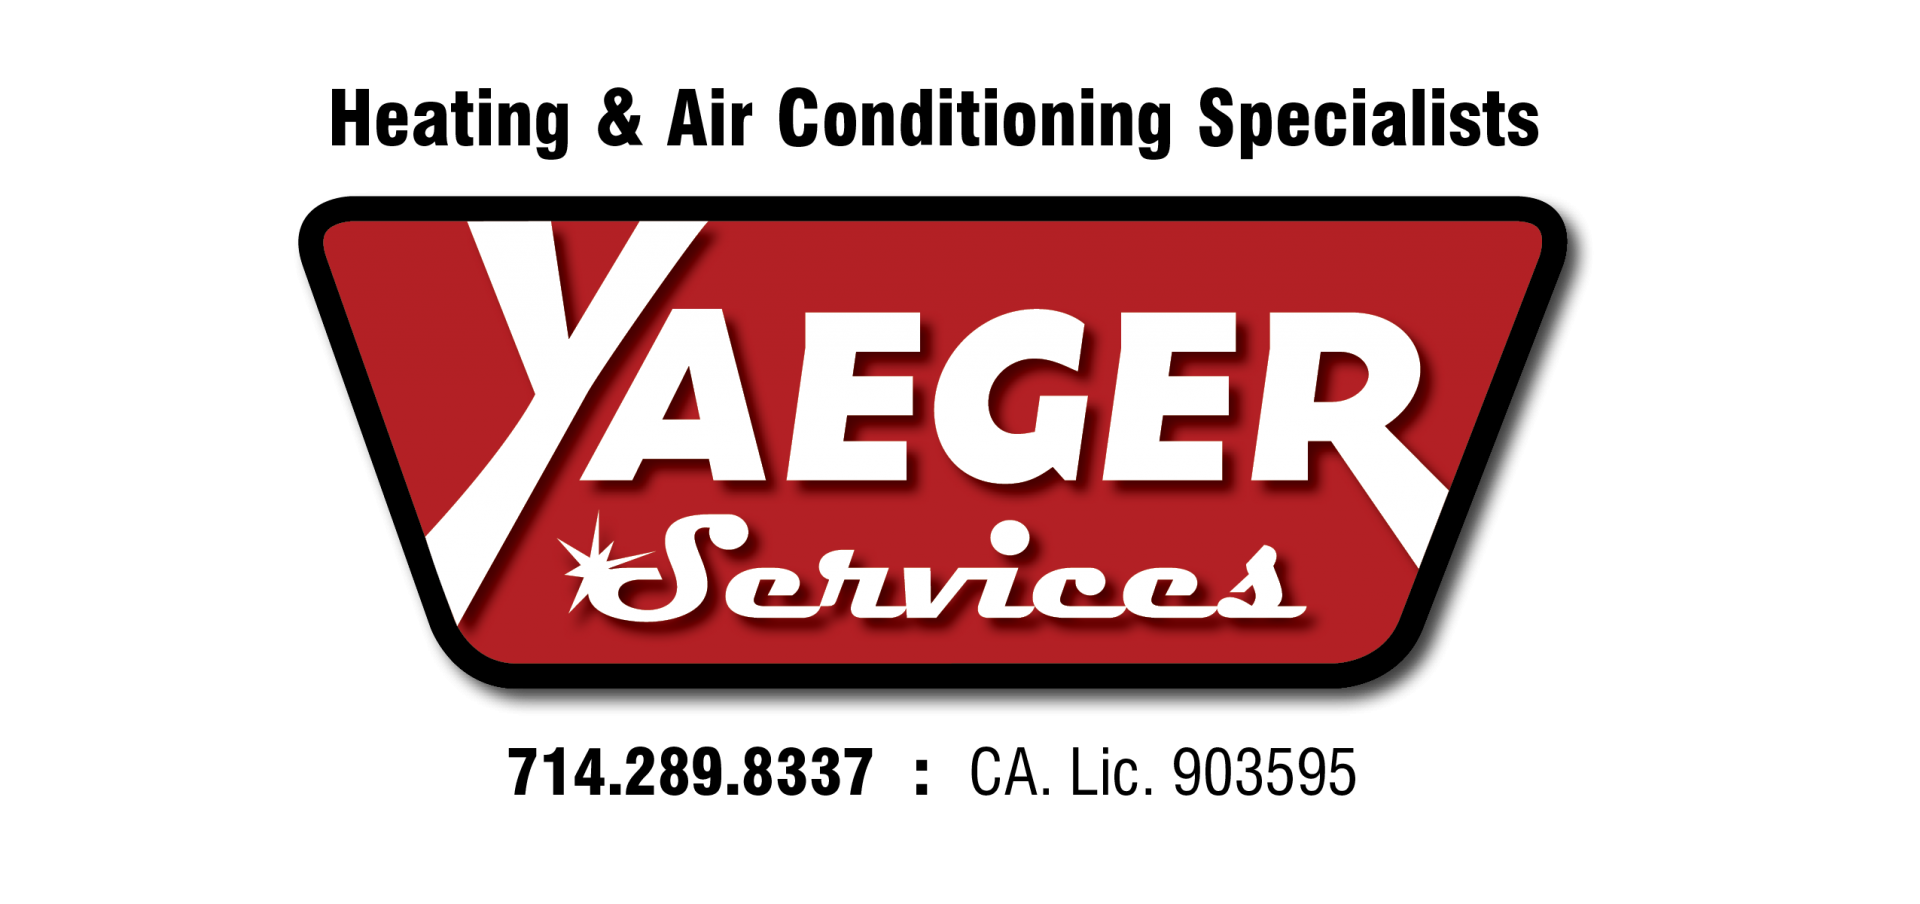 Yaeger Services, Inc. company logo